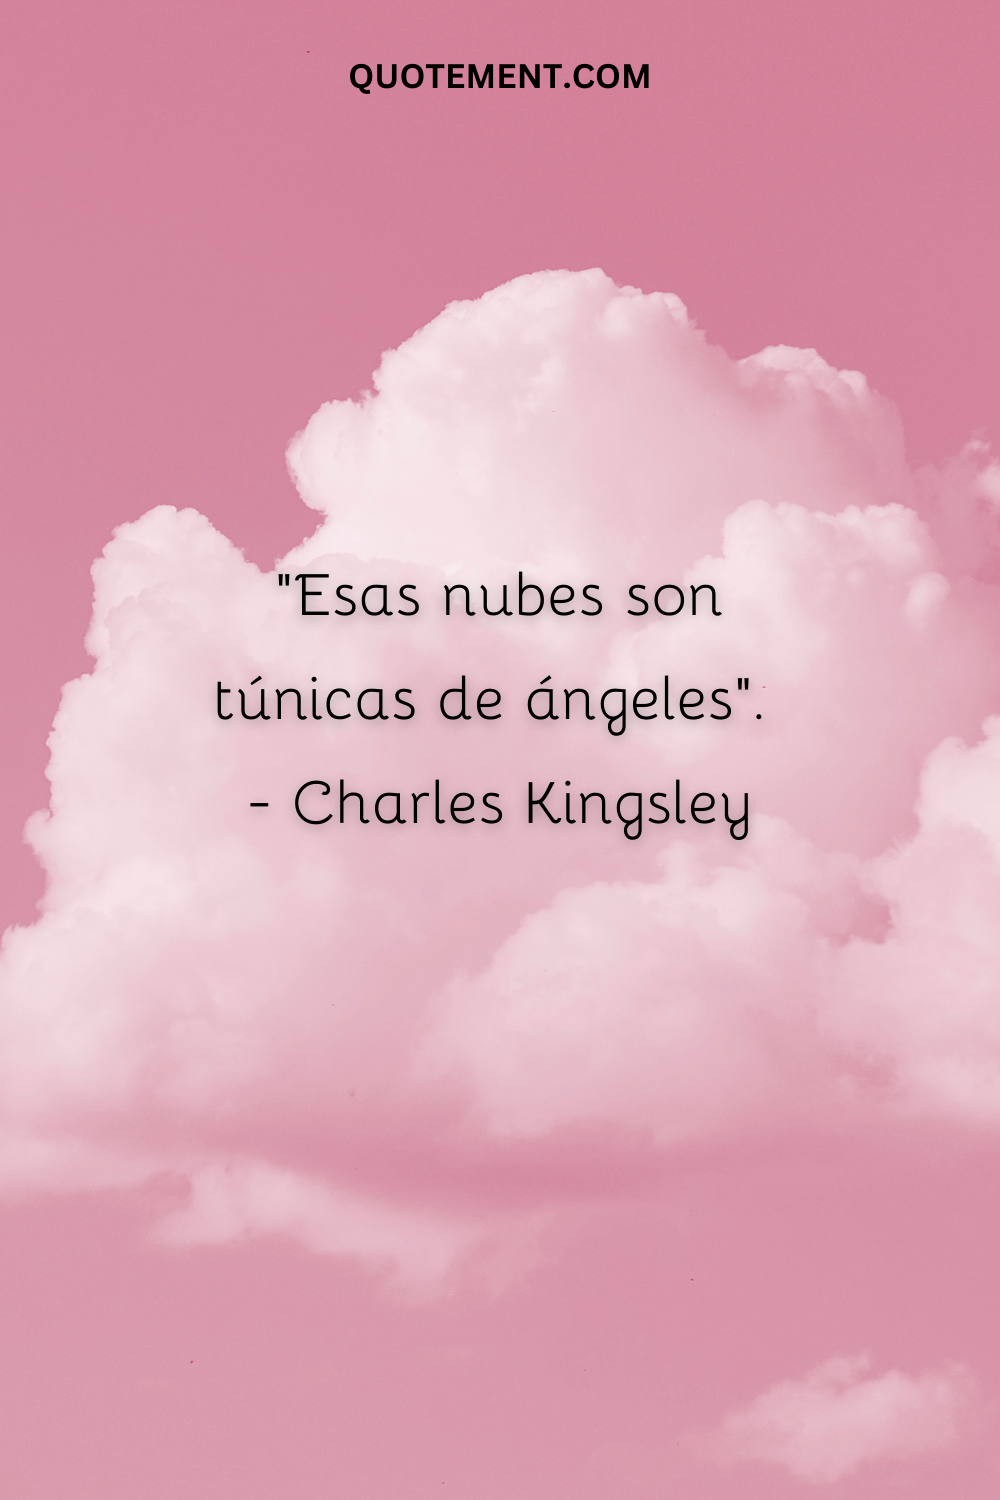 "Esas nubes son túnicas de ángeles". - Charles Kingsley